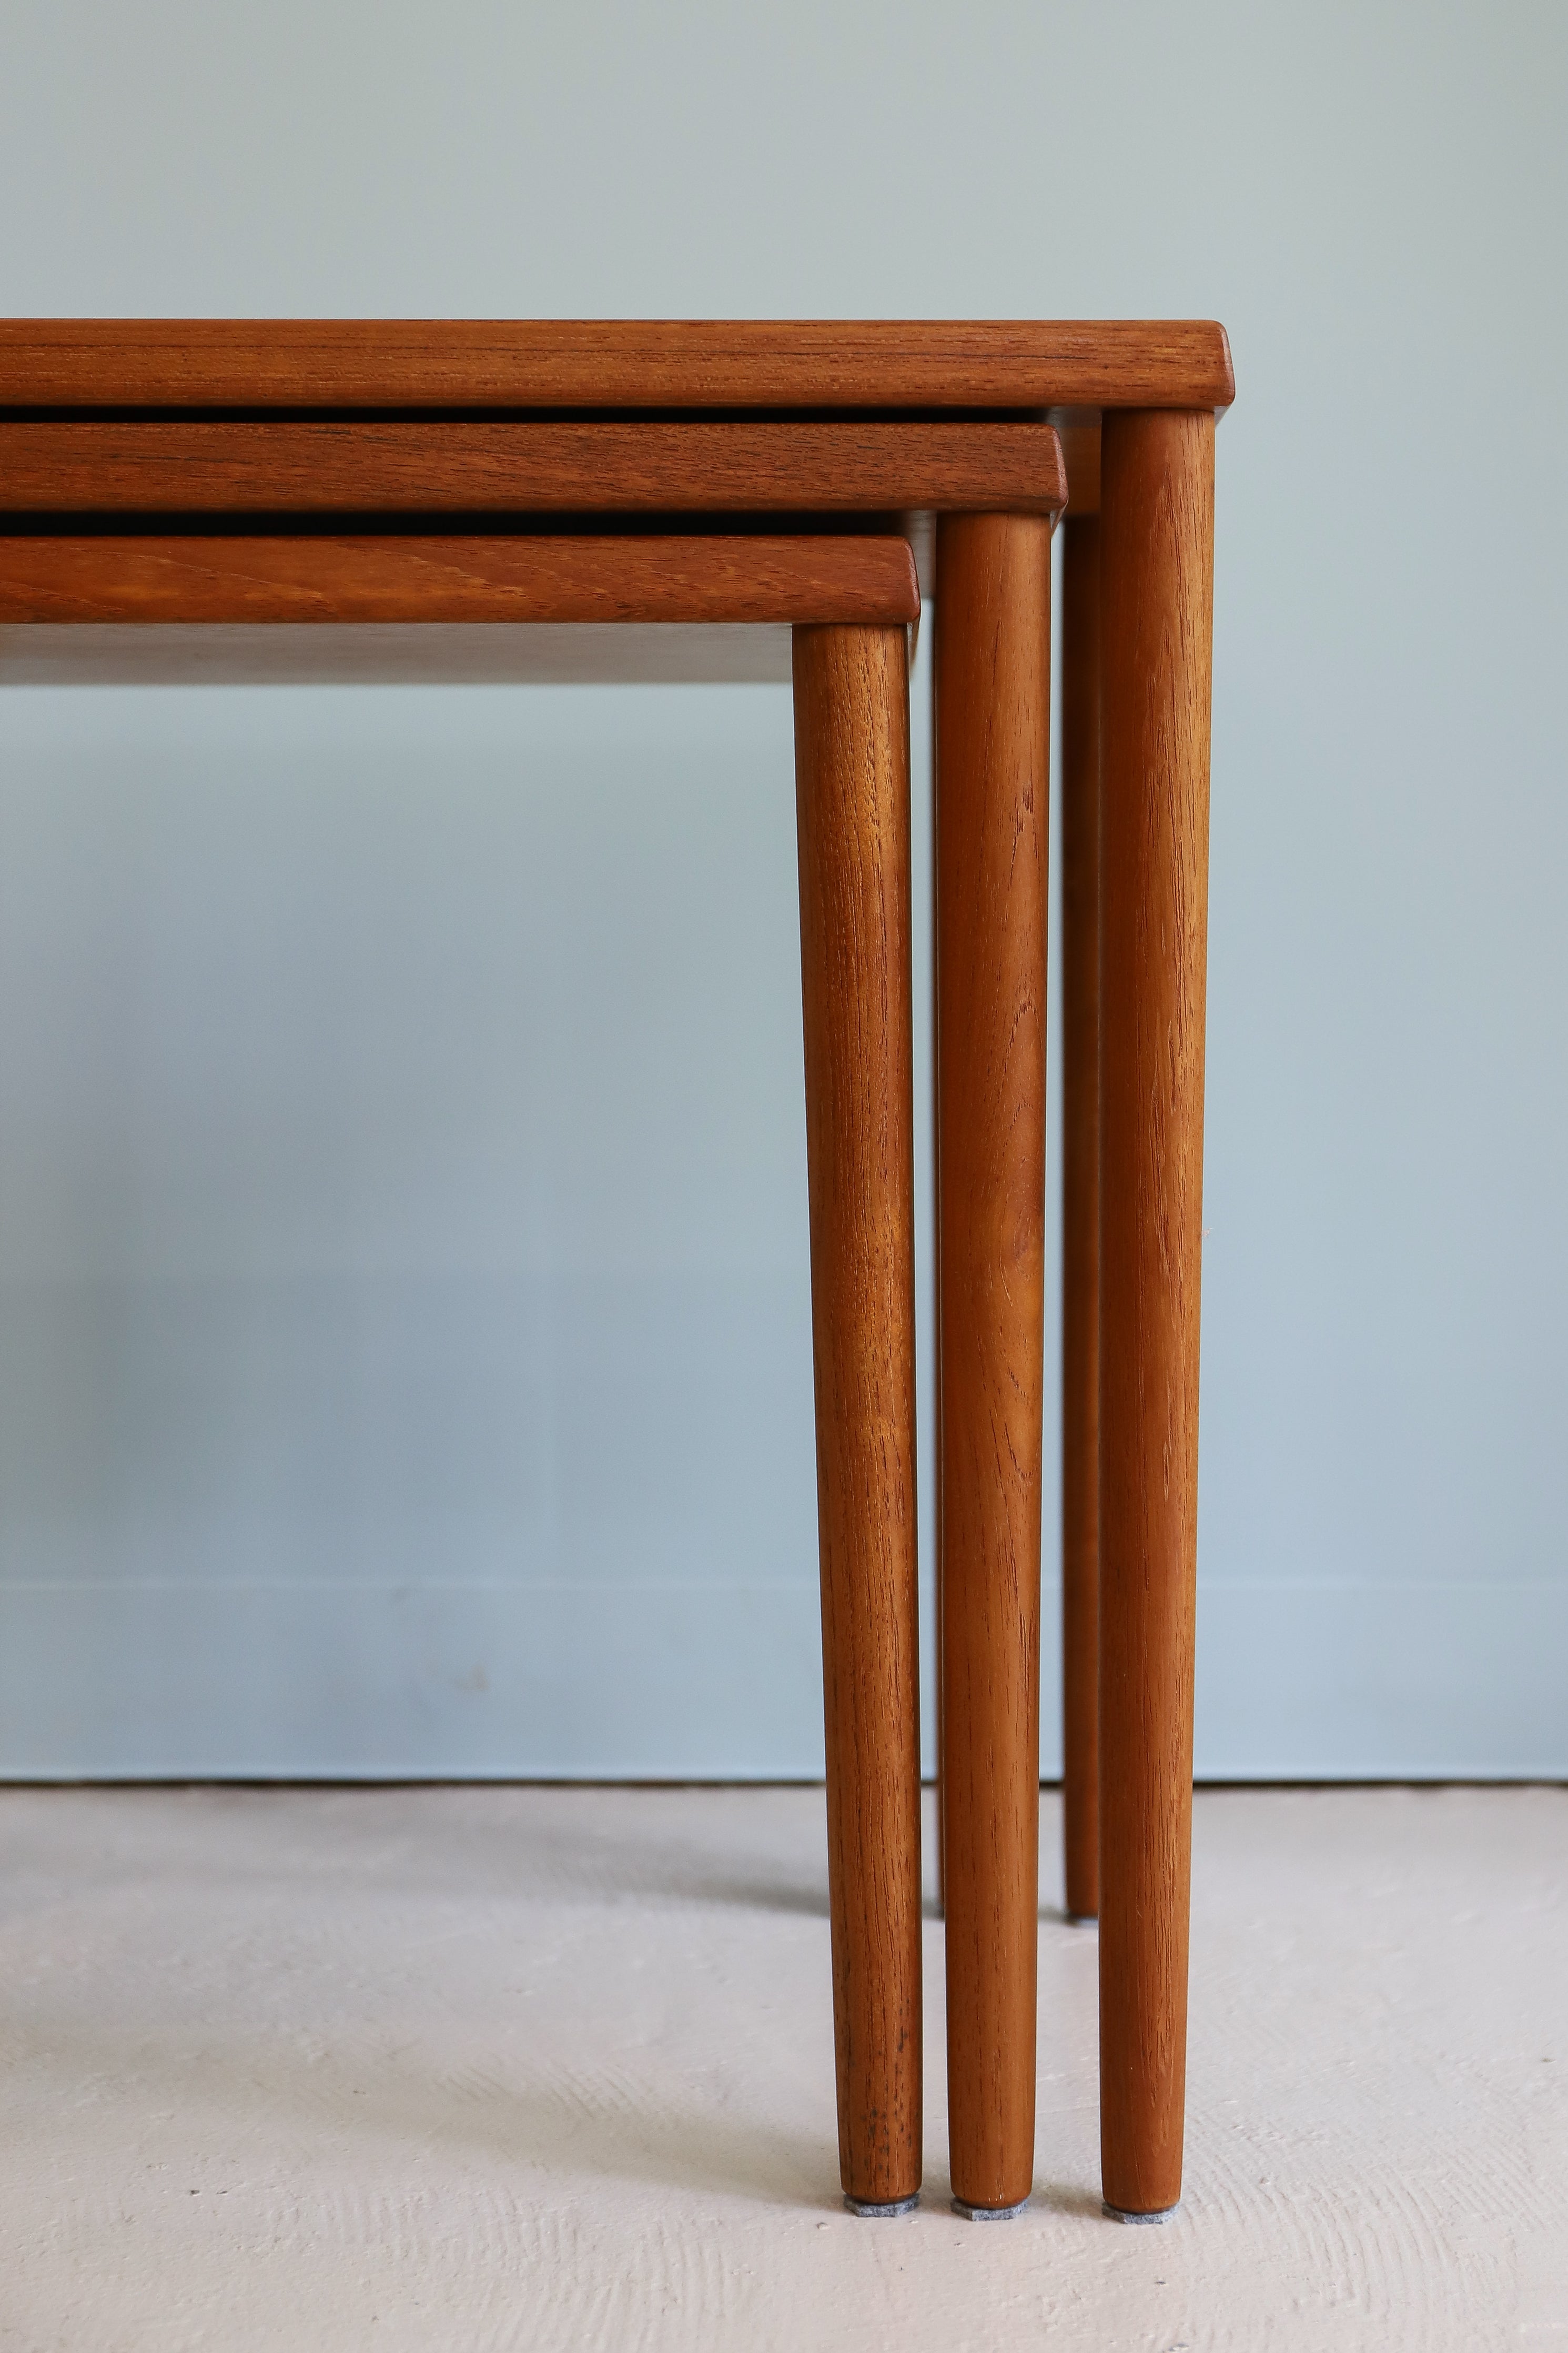 Danish Vintage Nesting Table Side Table/デンマークヴィンテージ ネストテーブル チーク材 サイドテーブル 北欧家具